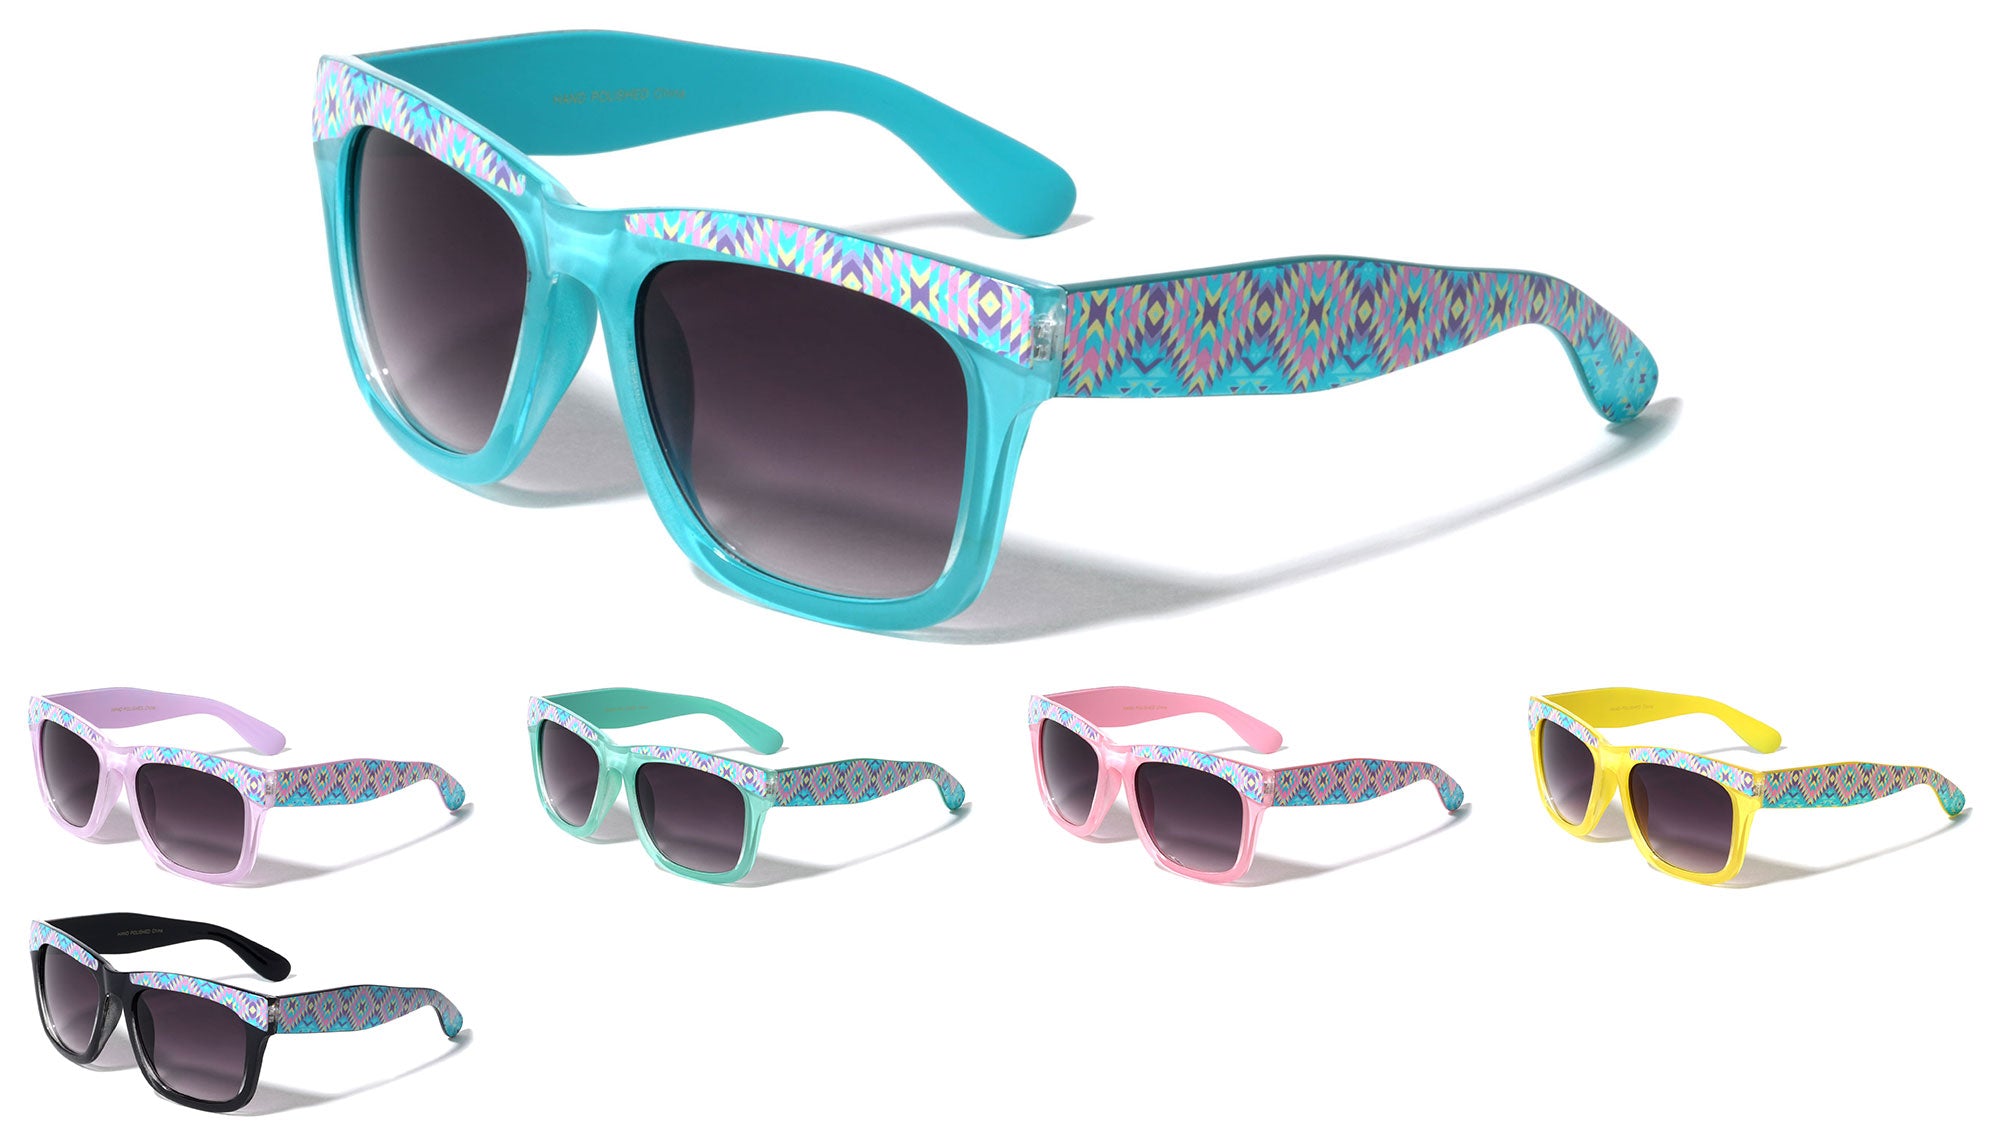 sunglasses pattern printable